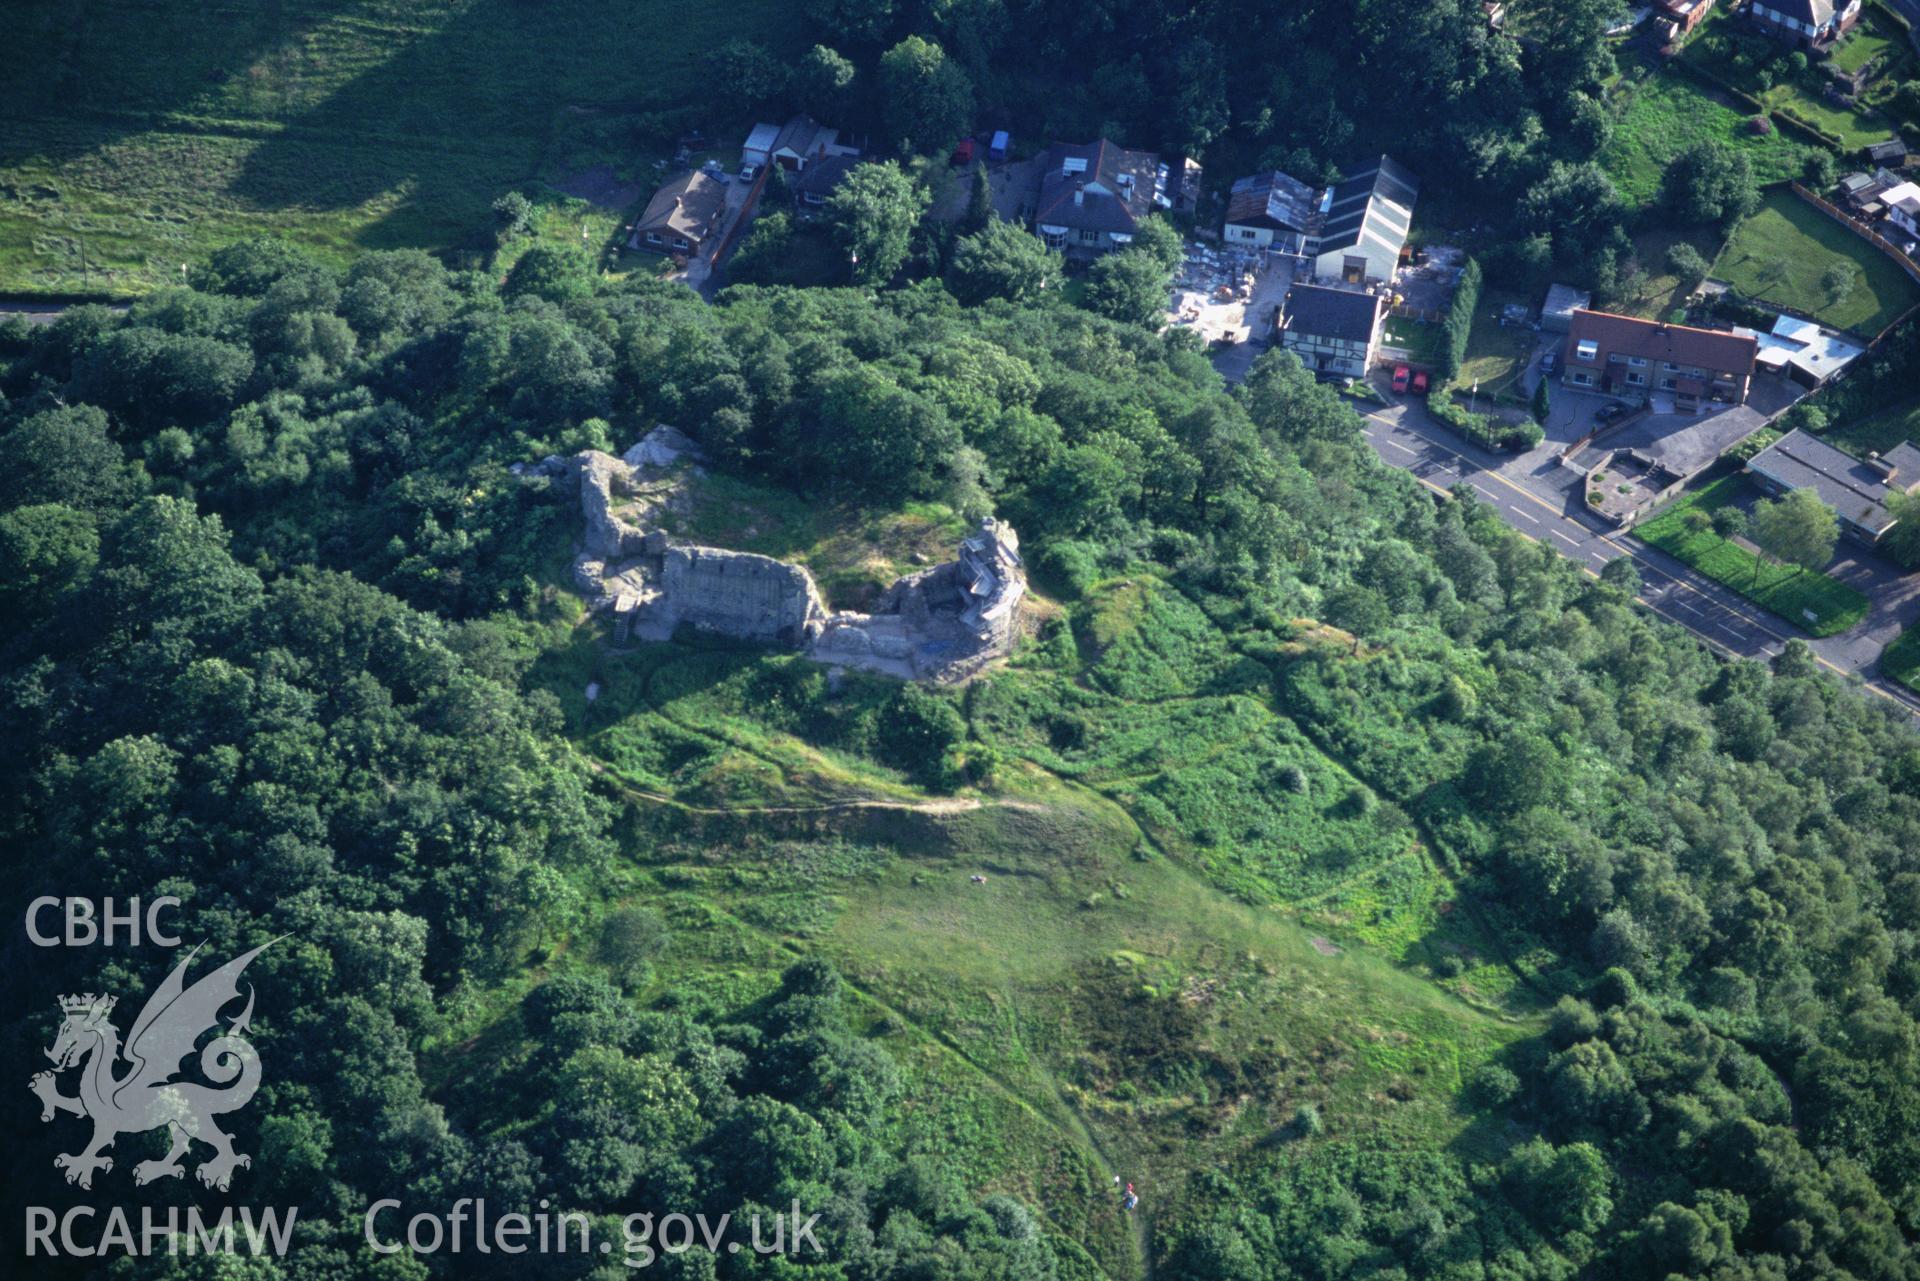 Slide of RCAHMW colour oblique aerial photograph of Caergwrle Castle, taken by C.R. Musson, 23/6/1993.